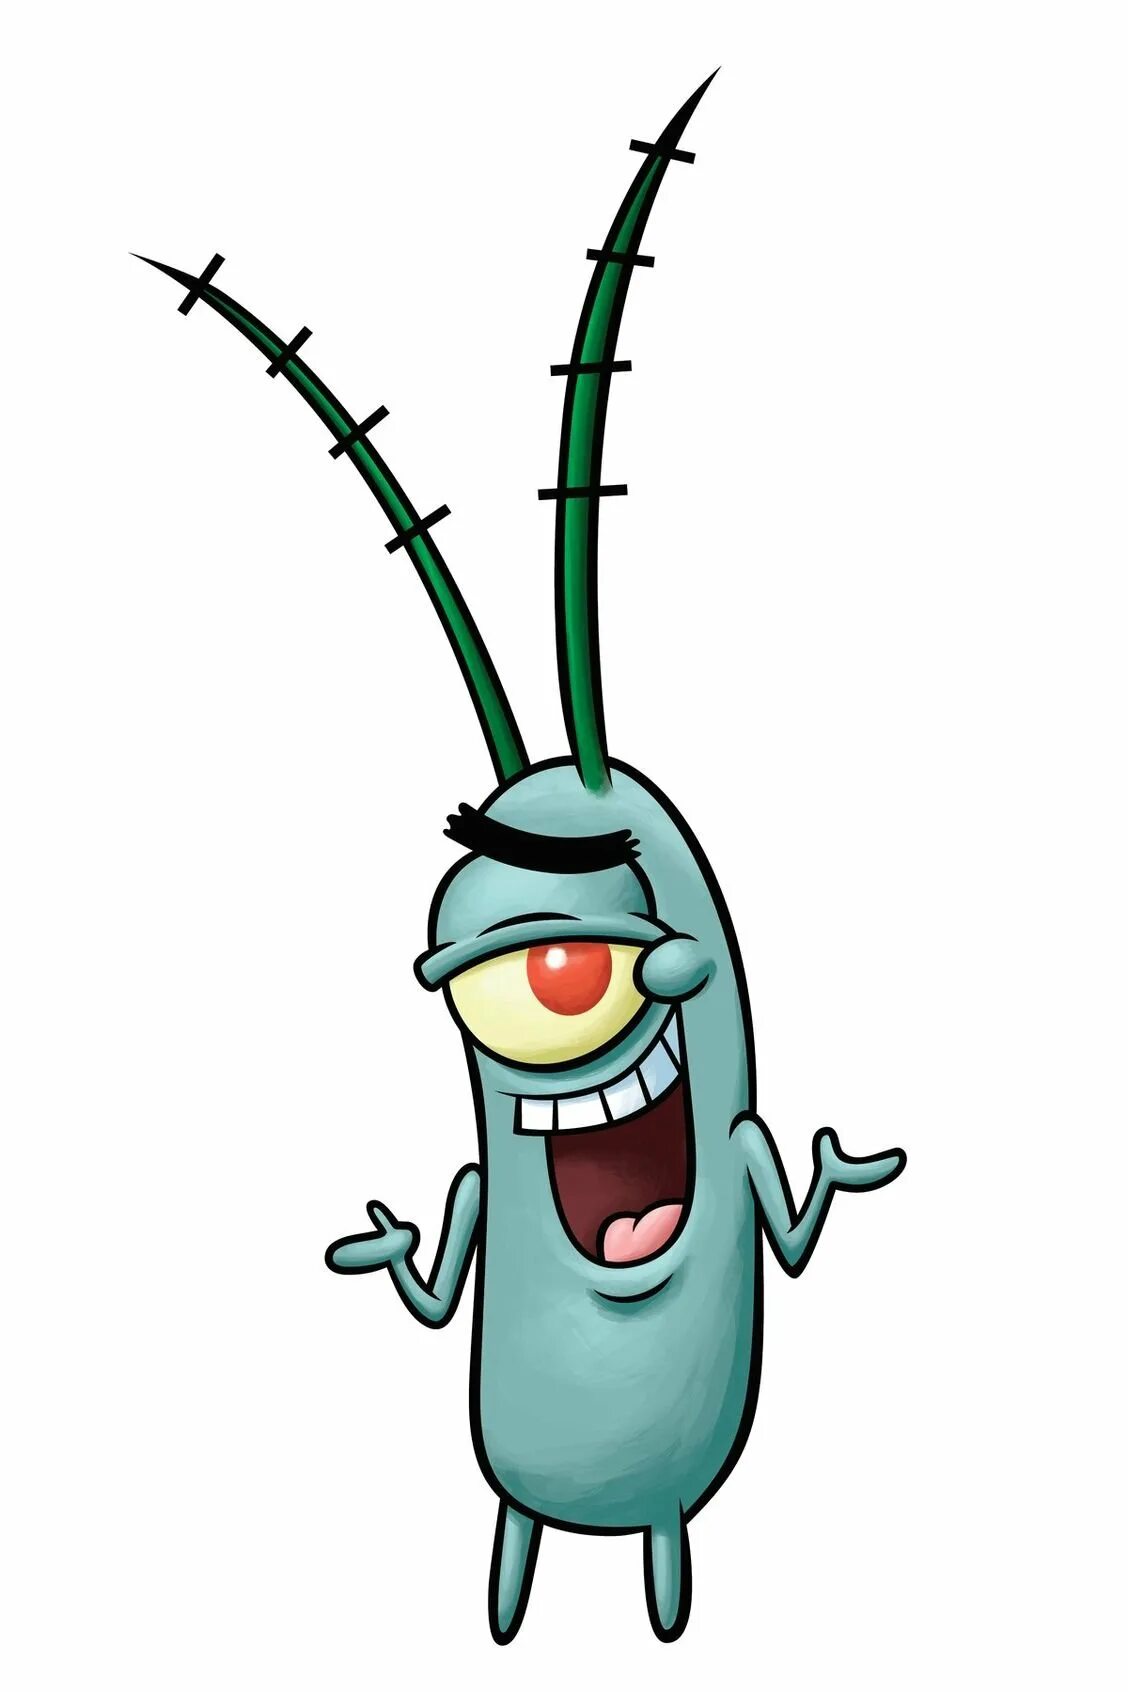 Плактон. Герои мультика Спанч Боб планктон. Планктон из скванчбоба. Планктон ИК губки Боба. Планктон из Спанч.